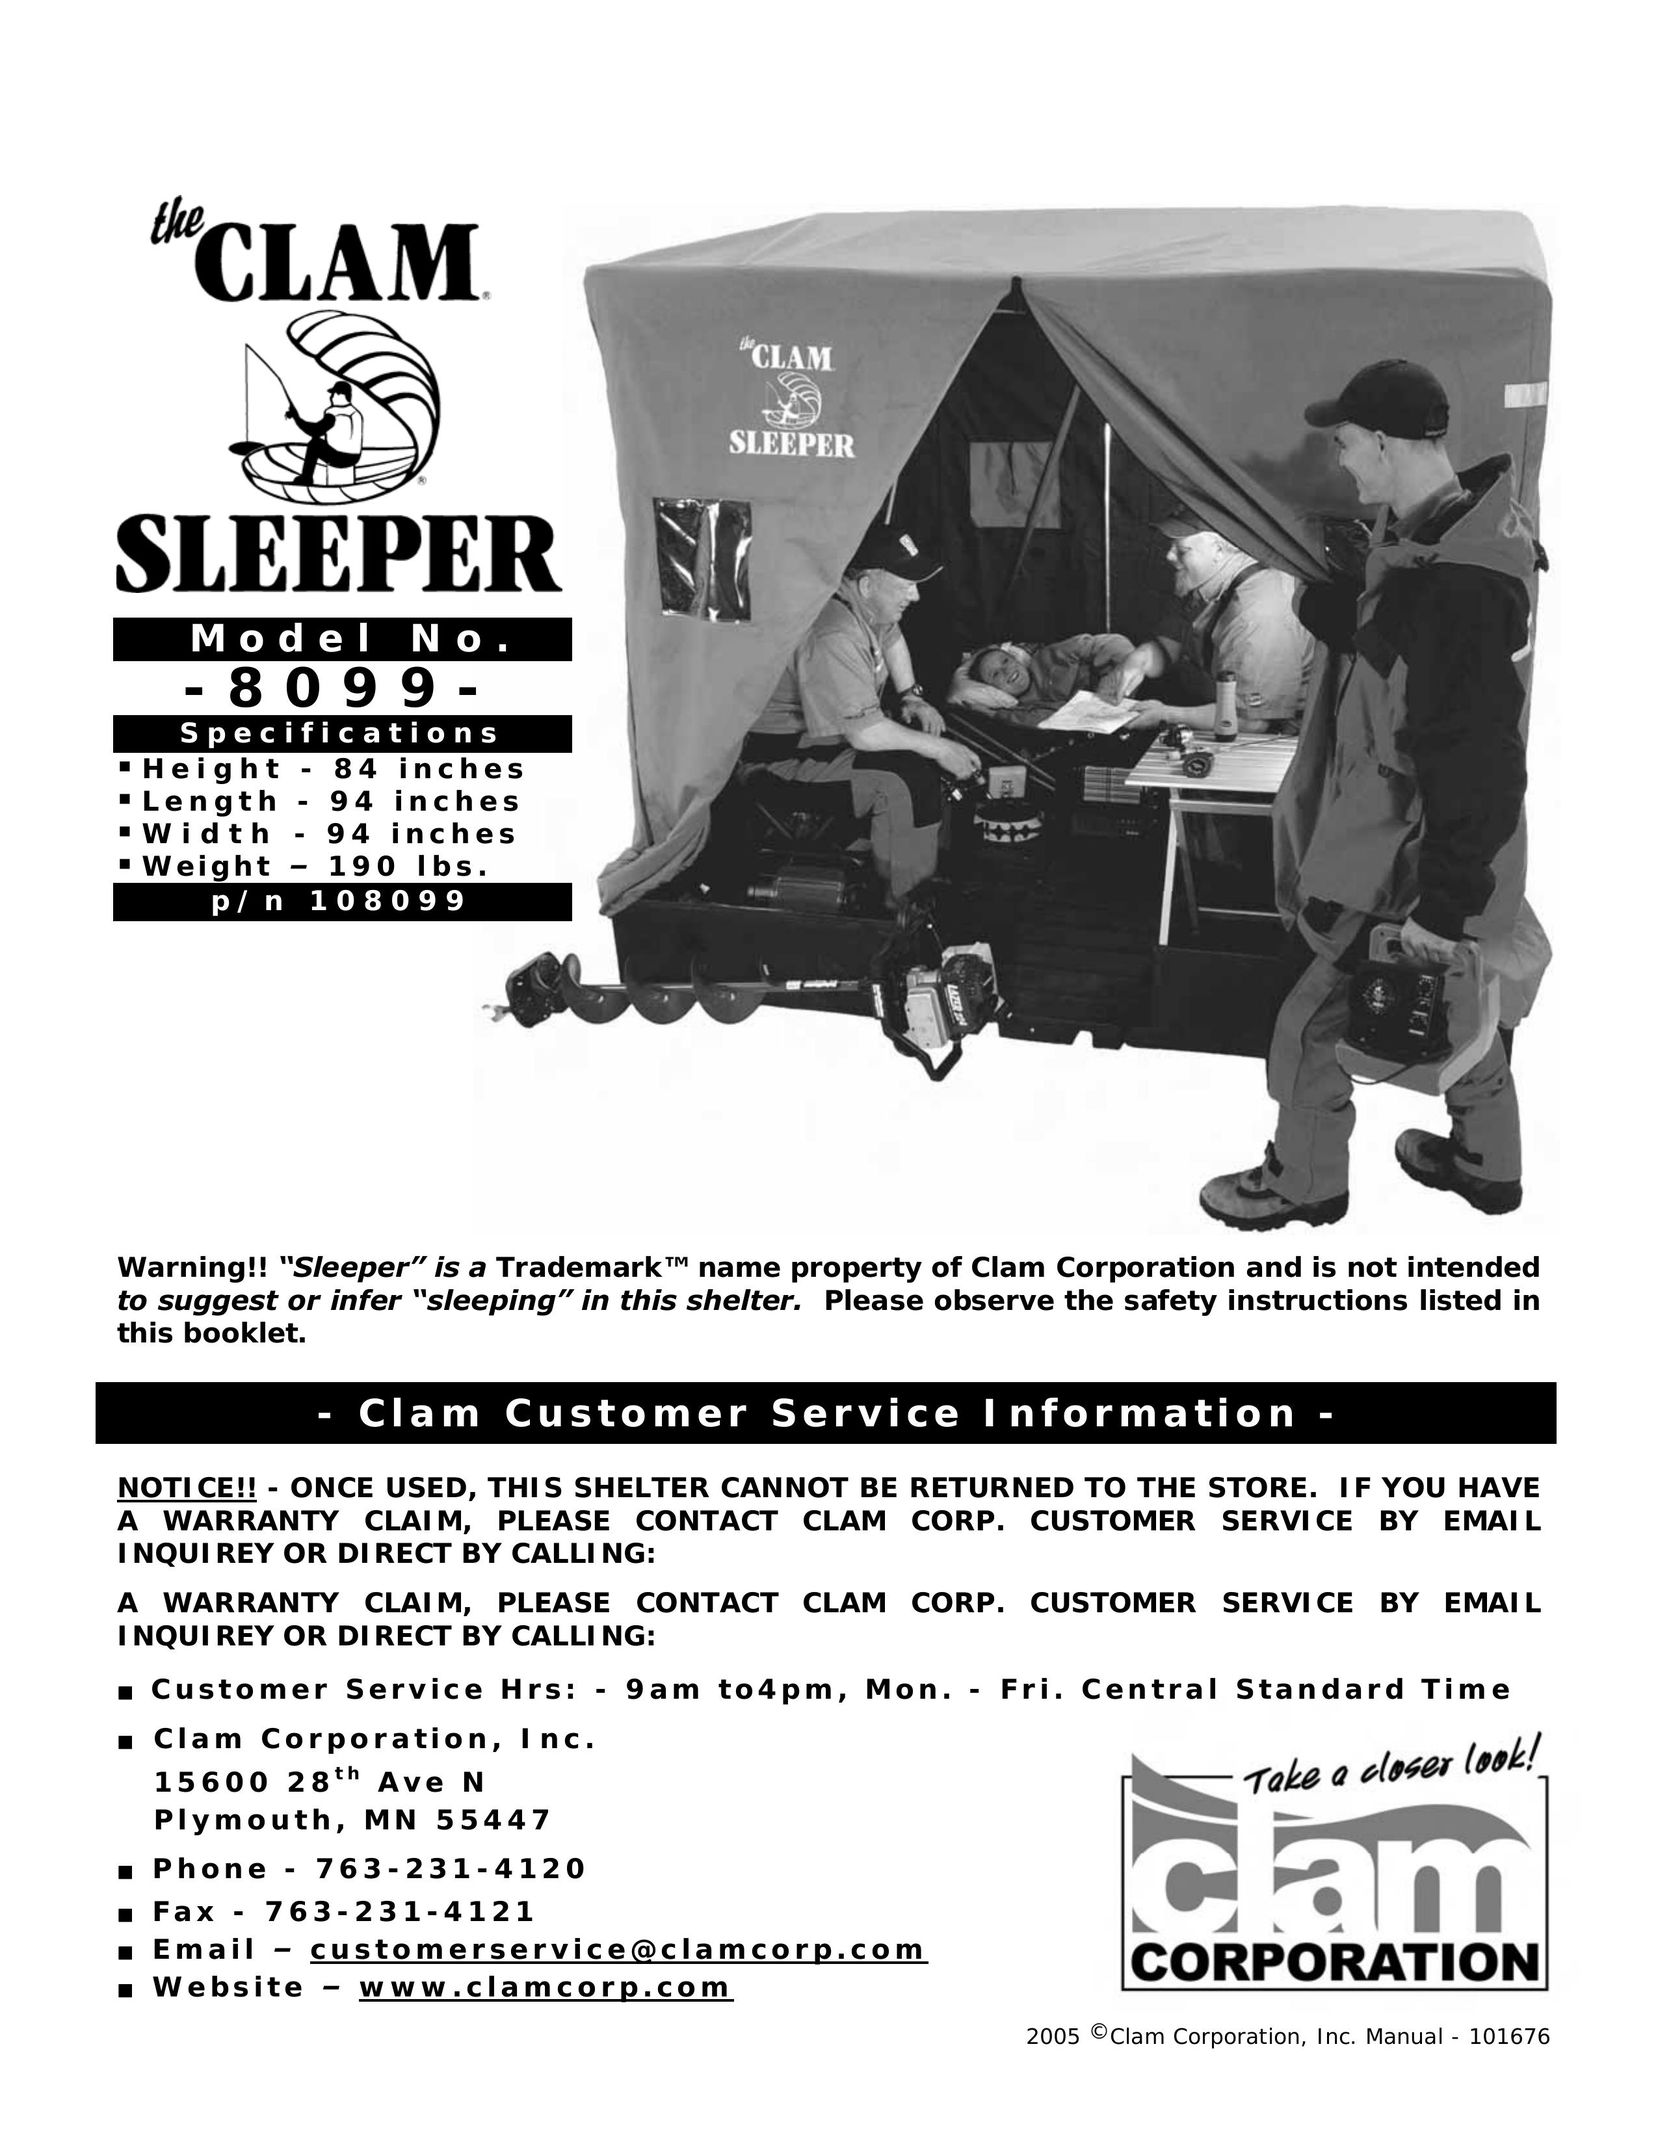 Clam Corp 8 0 9 9 Camping Equipment User Manual